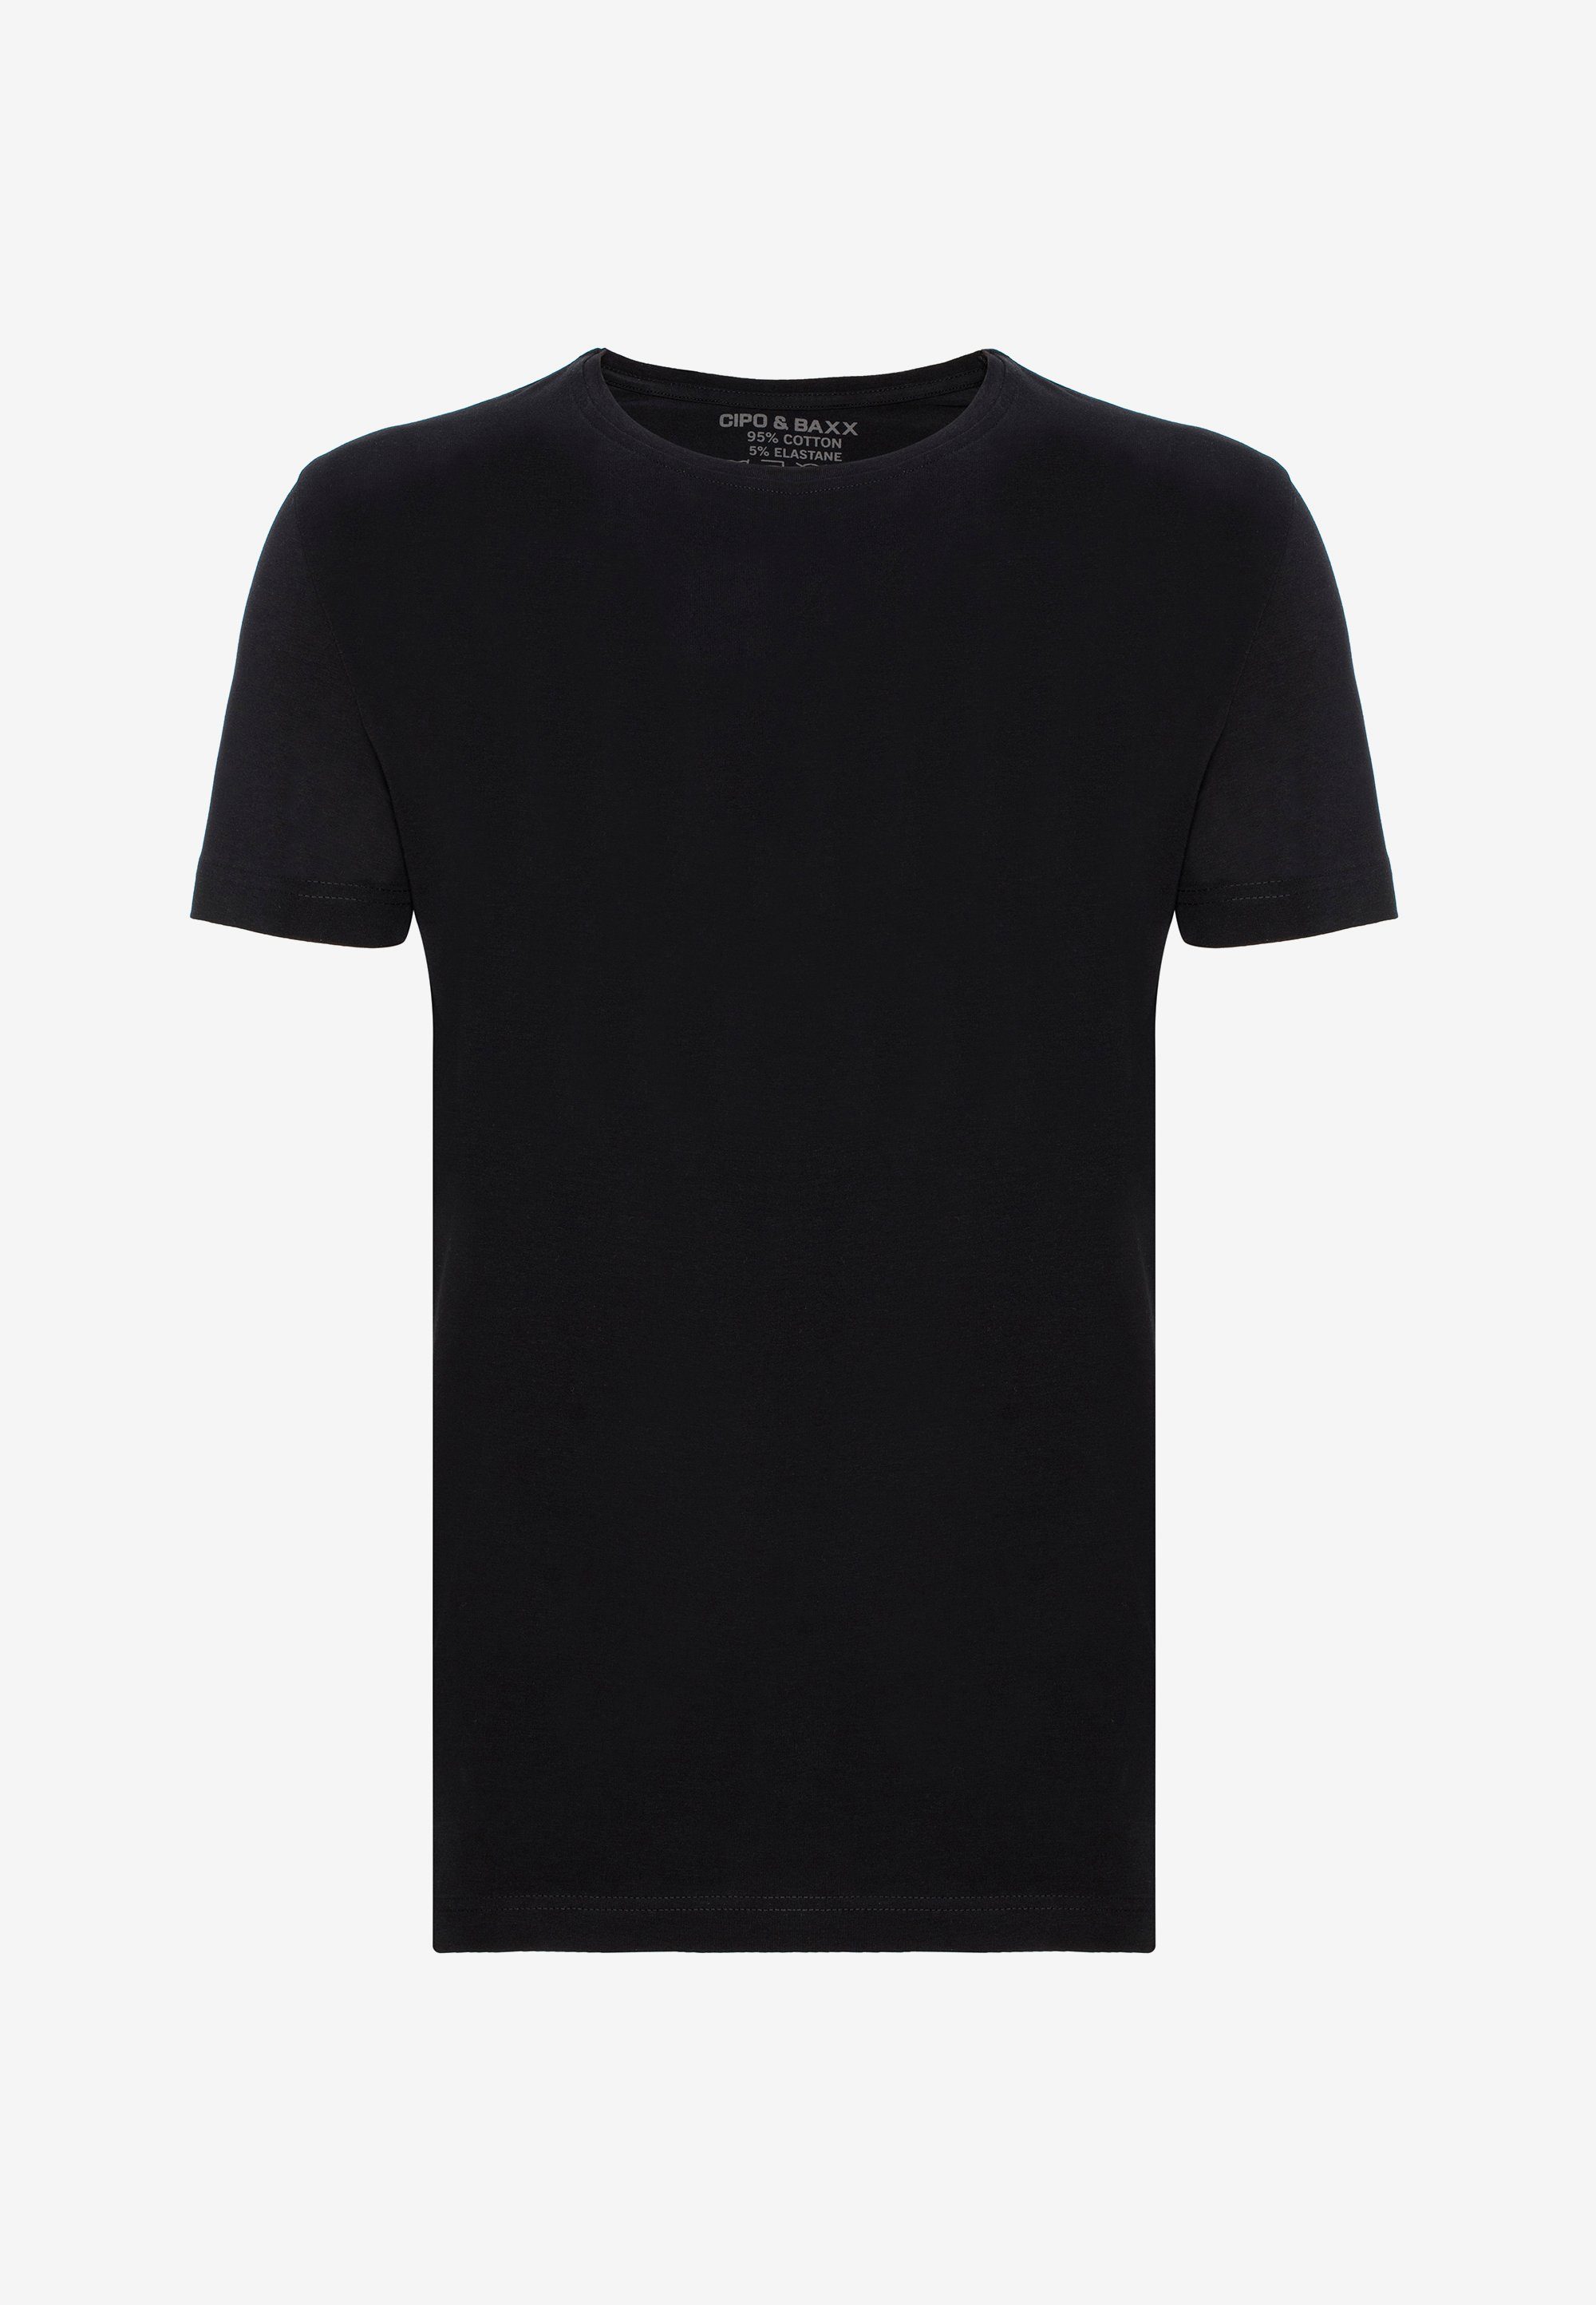 & Cipo Rundhalsausschnitt schwarz Baxx mit T-Shirt modernem